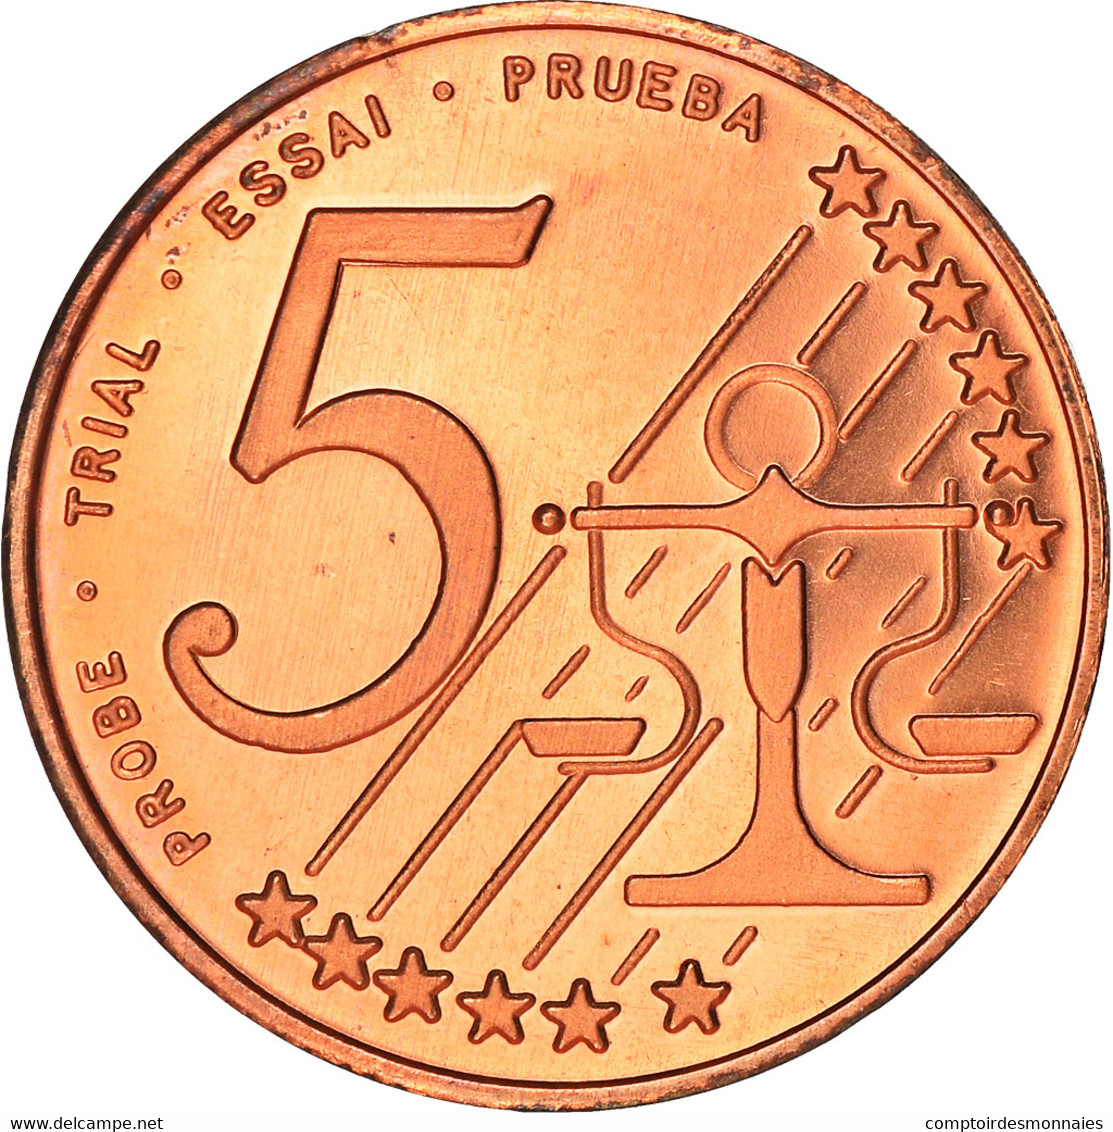 Chypre, Fantasy Euro Patterns, 5 Euro Cent, 2004, Proof, FDC, Cuivre - Pruebas Privadas